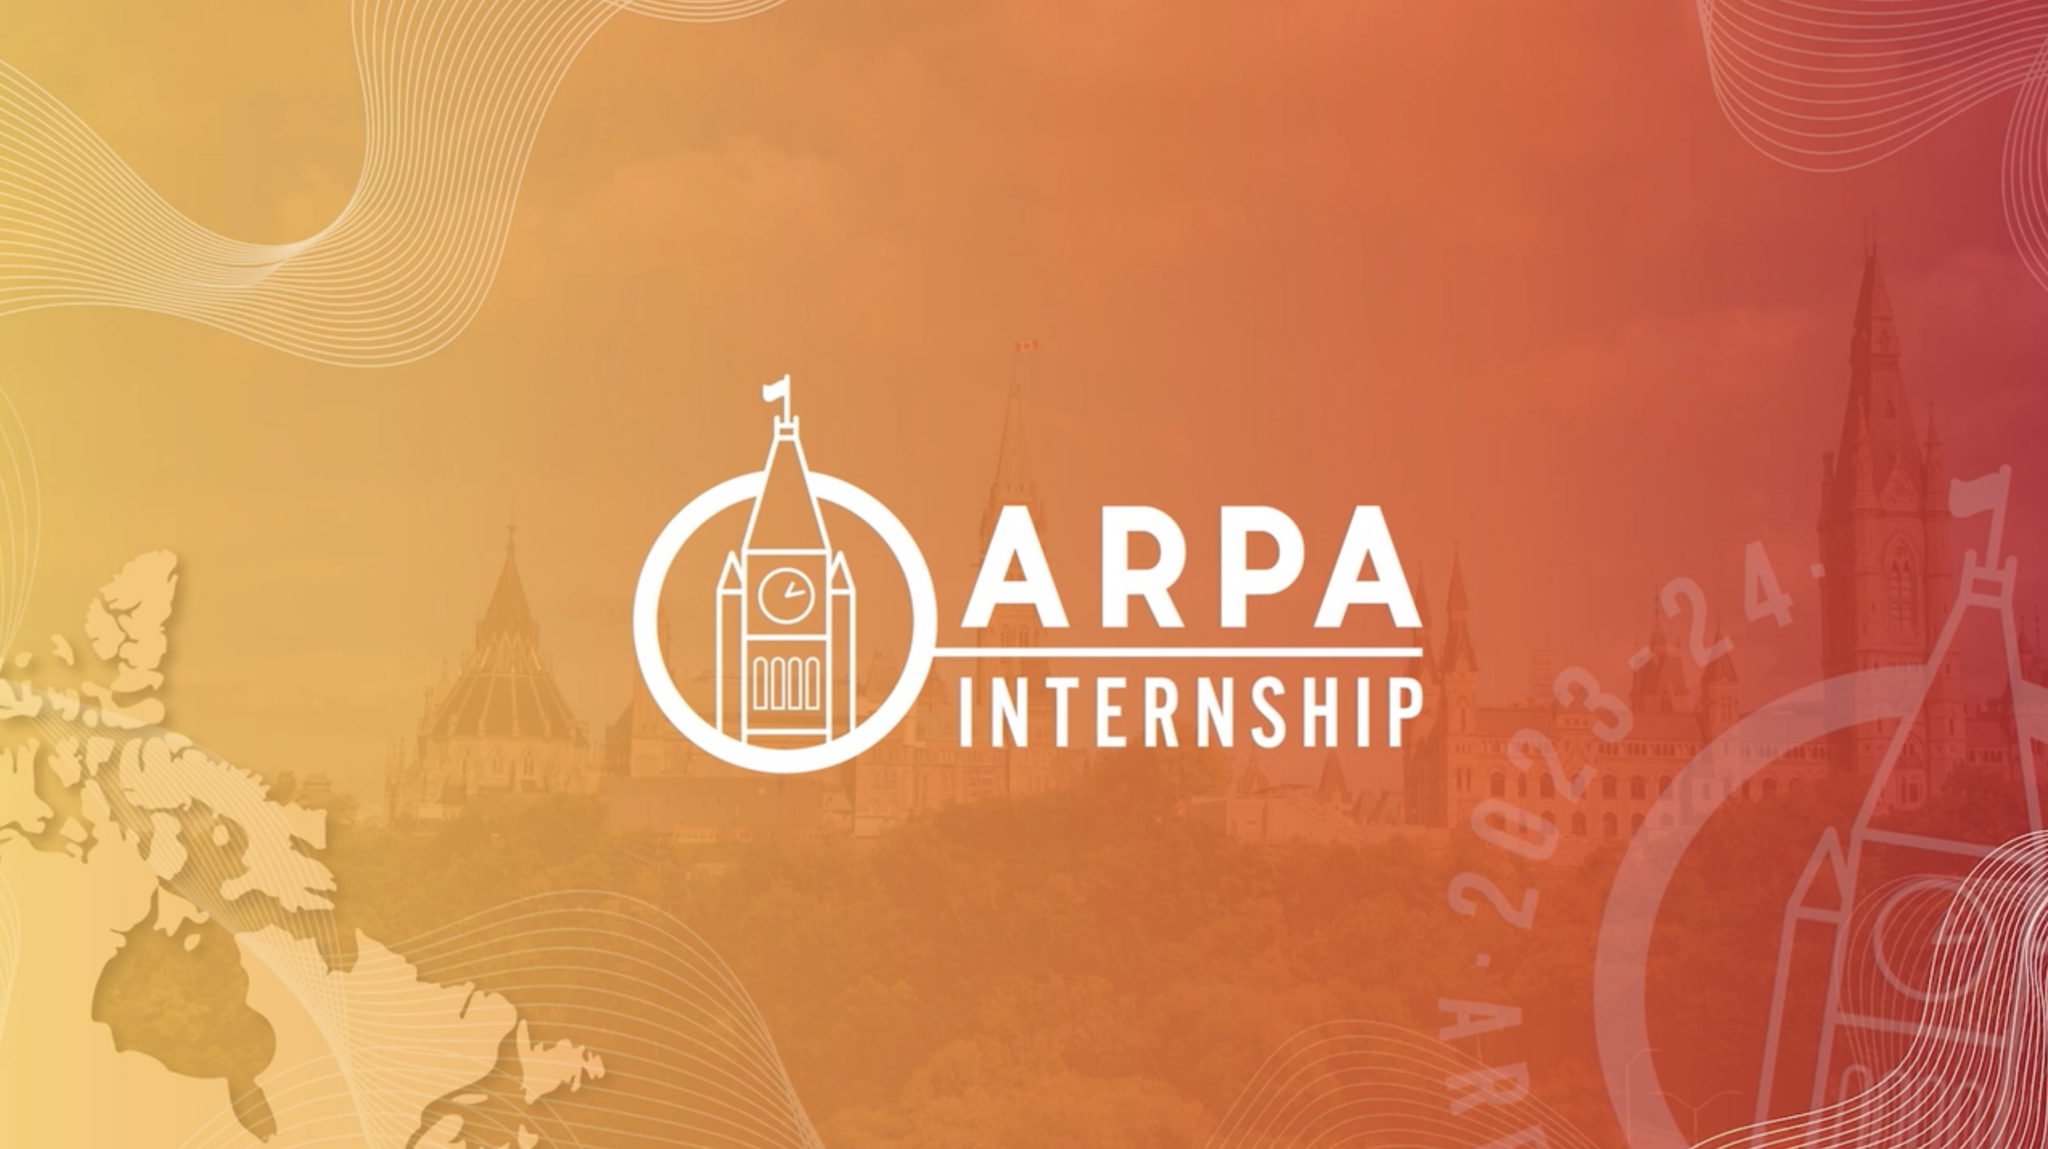 ARPA Internship